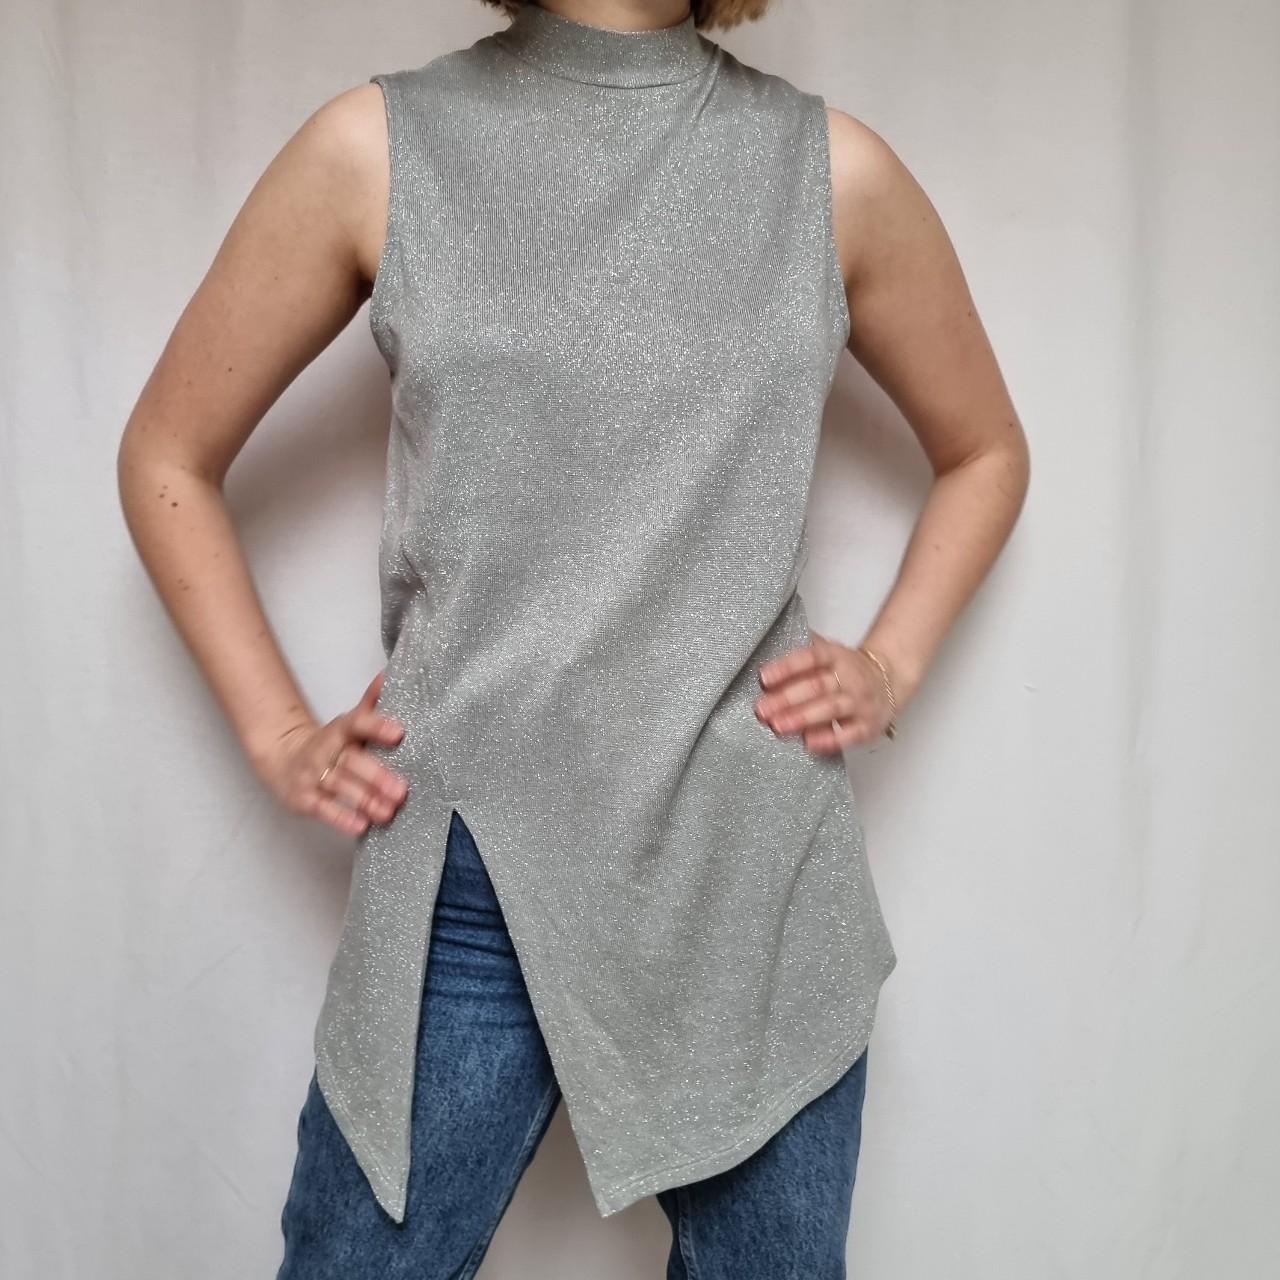 Metallic Grey/Silver Longline Vest Make a... - Depop